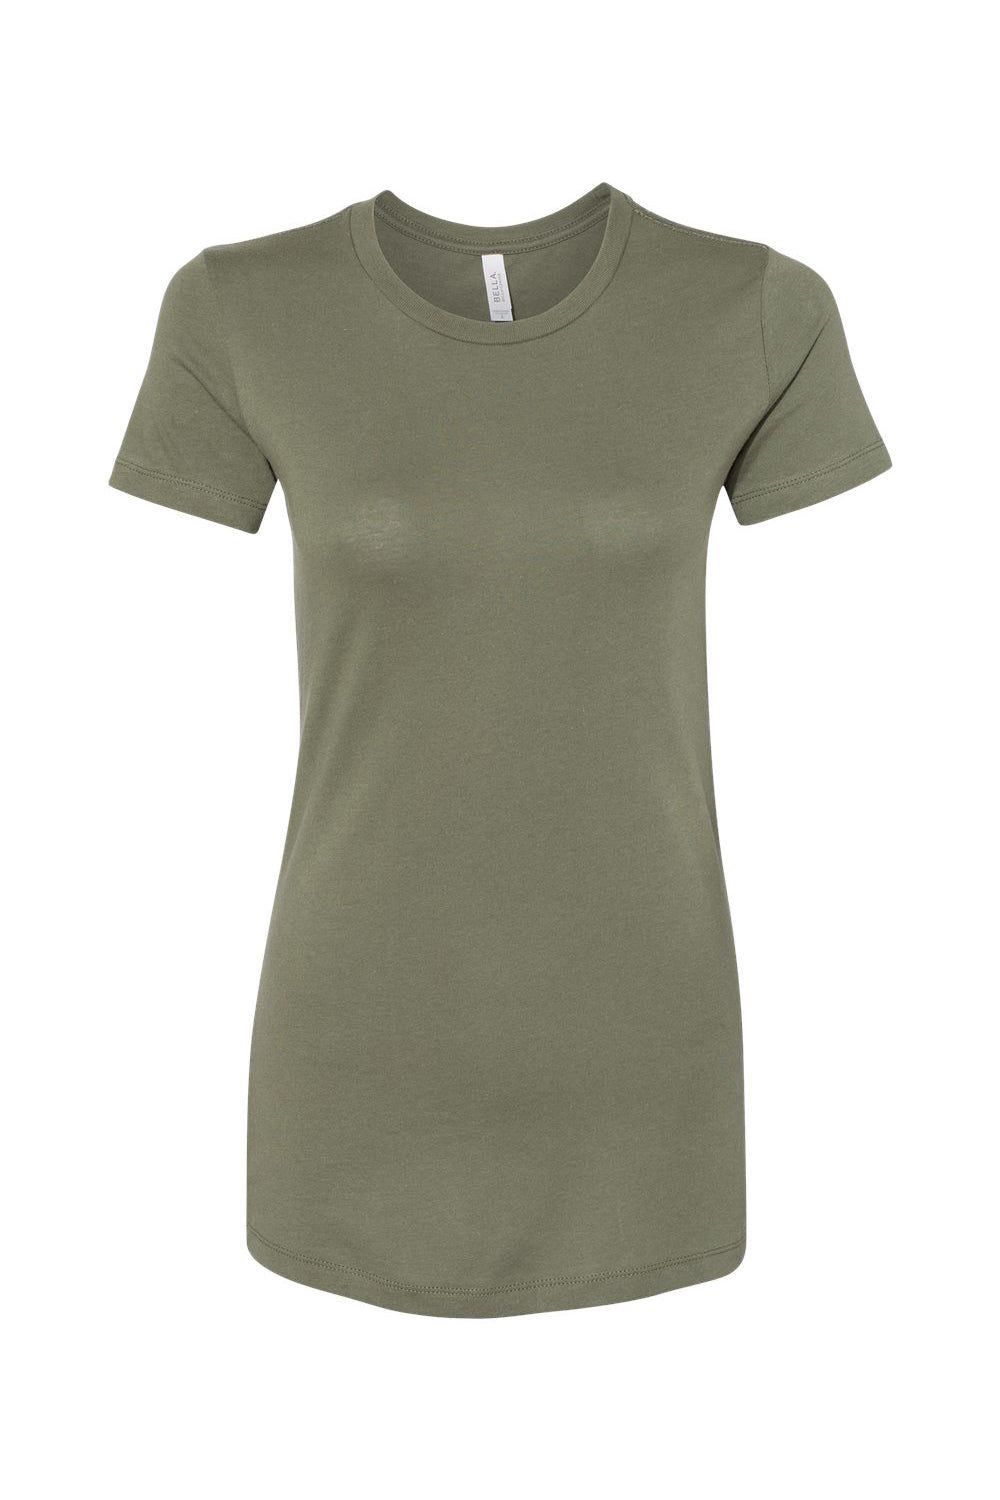 Bella + Canvas BC6004/6004 Womens The Favorite Short Sleeve Crewneck T-Shirt Military Green Flat Front